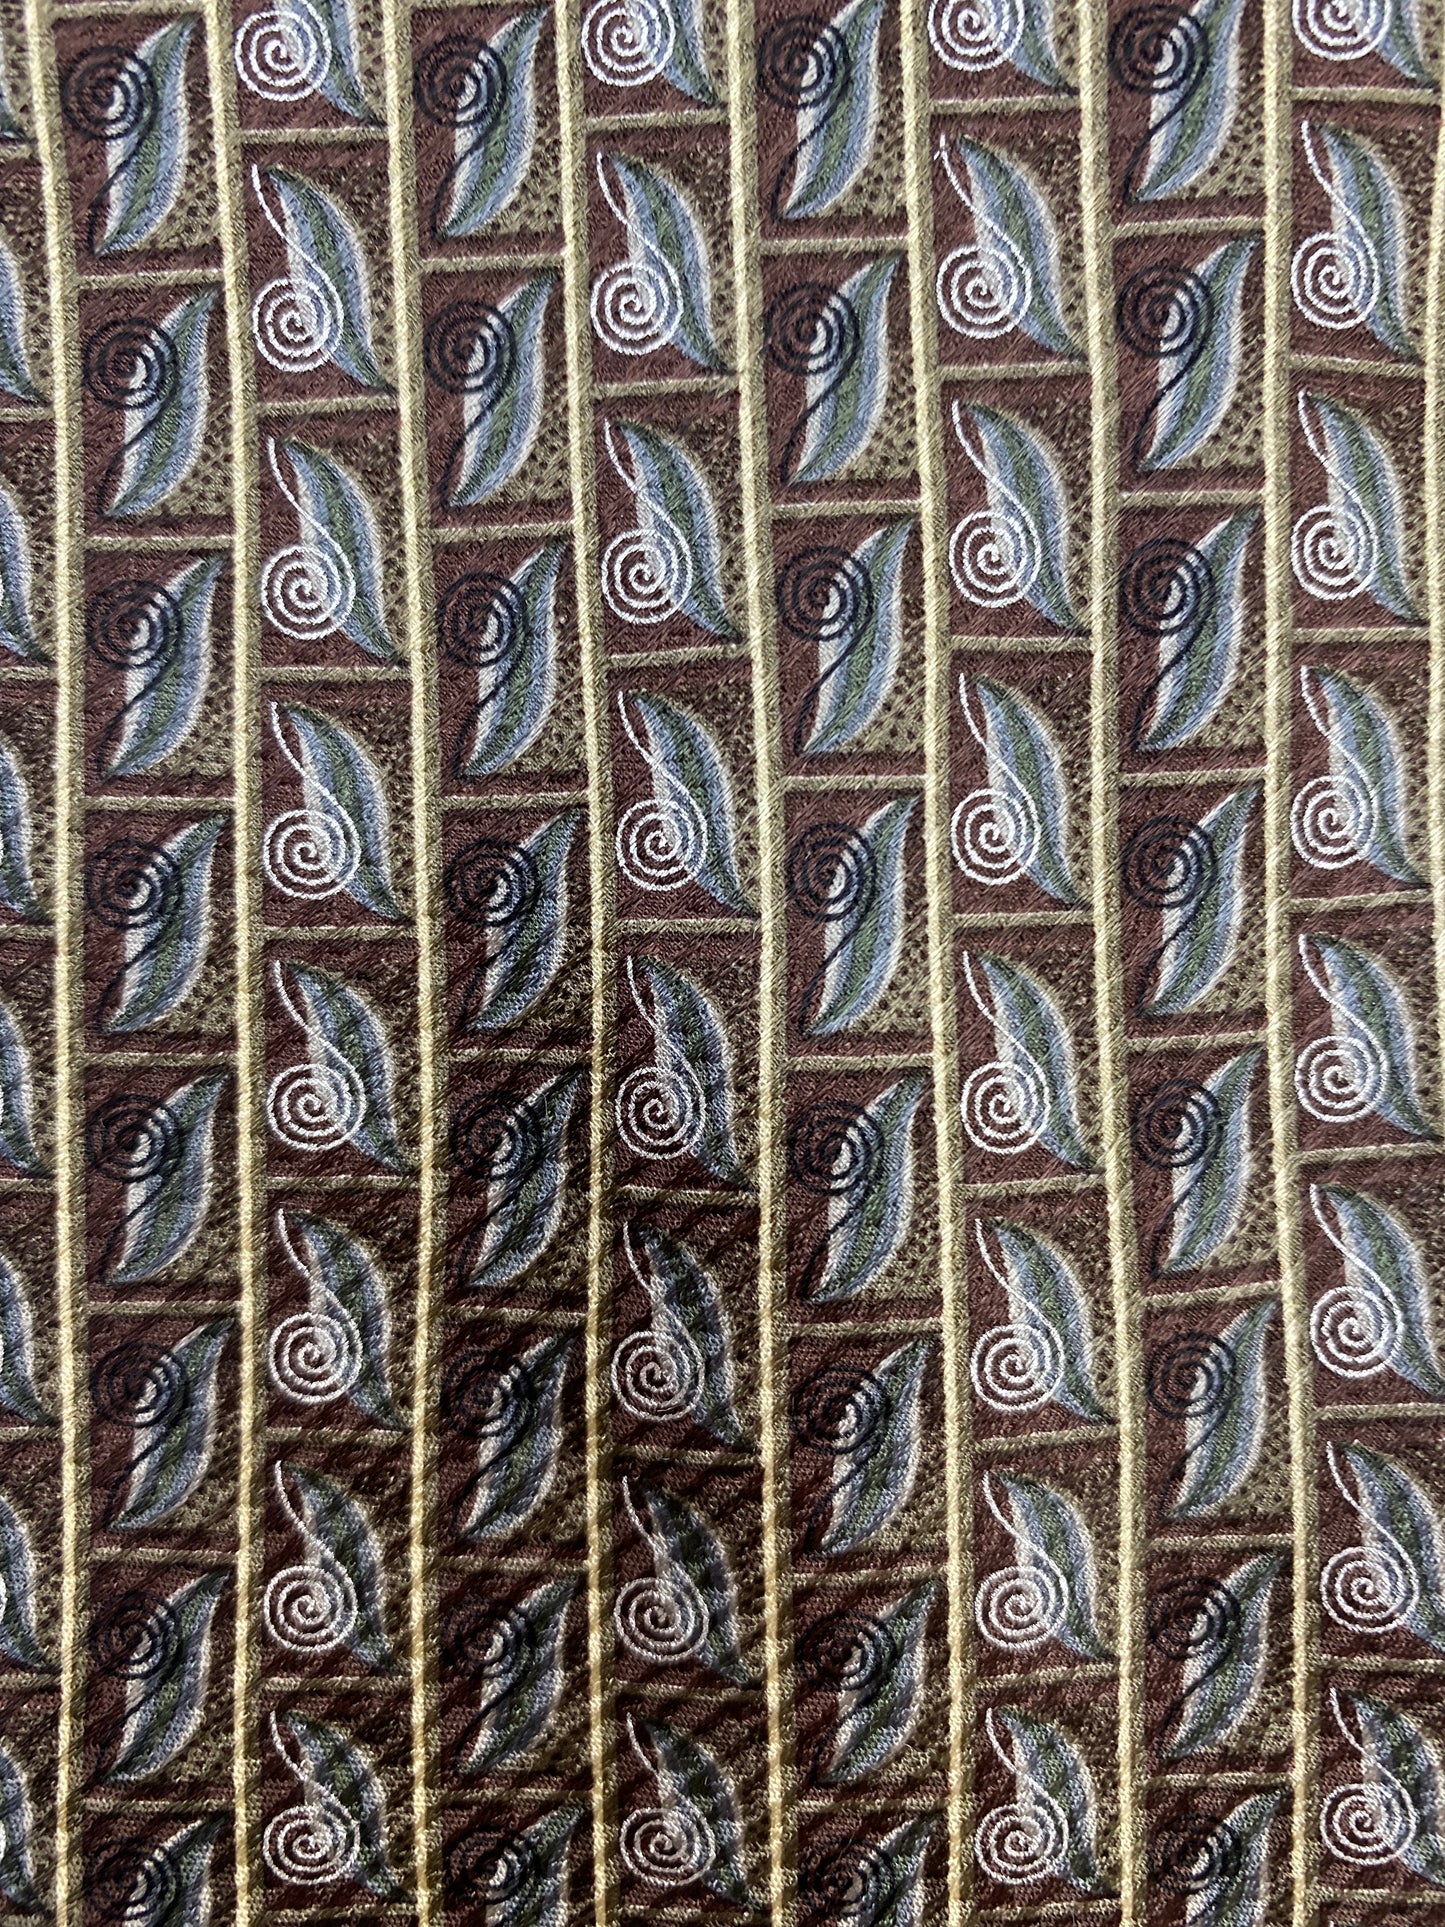 Close-up of: 90s Deadstock Silk Necktie, Men's Vintage Brown/ Grey Swirl Pattern Tie, NOS